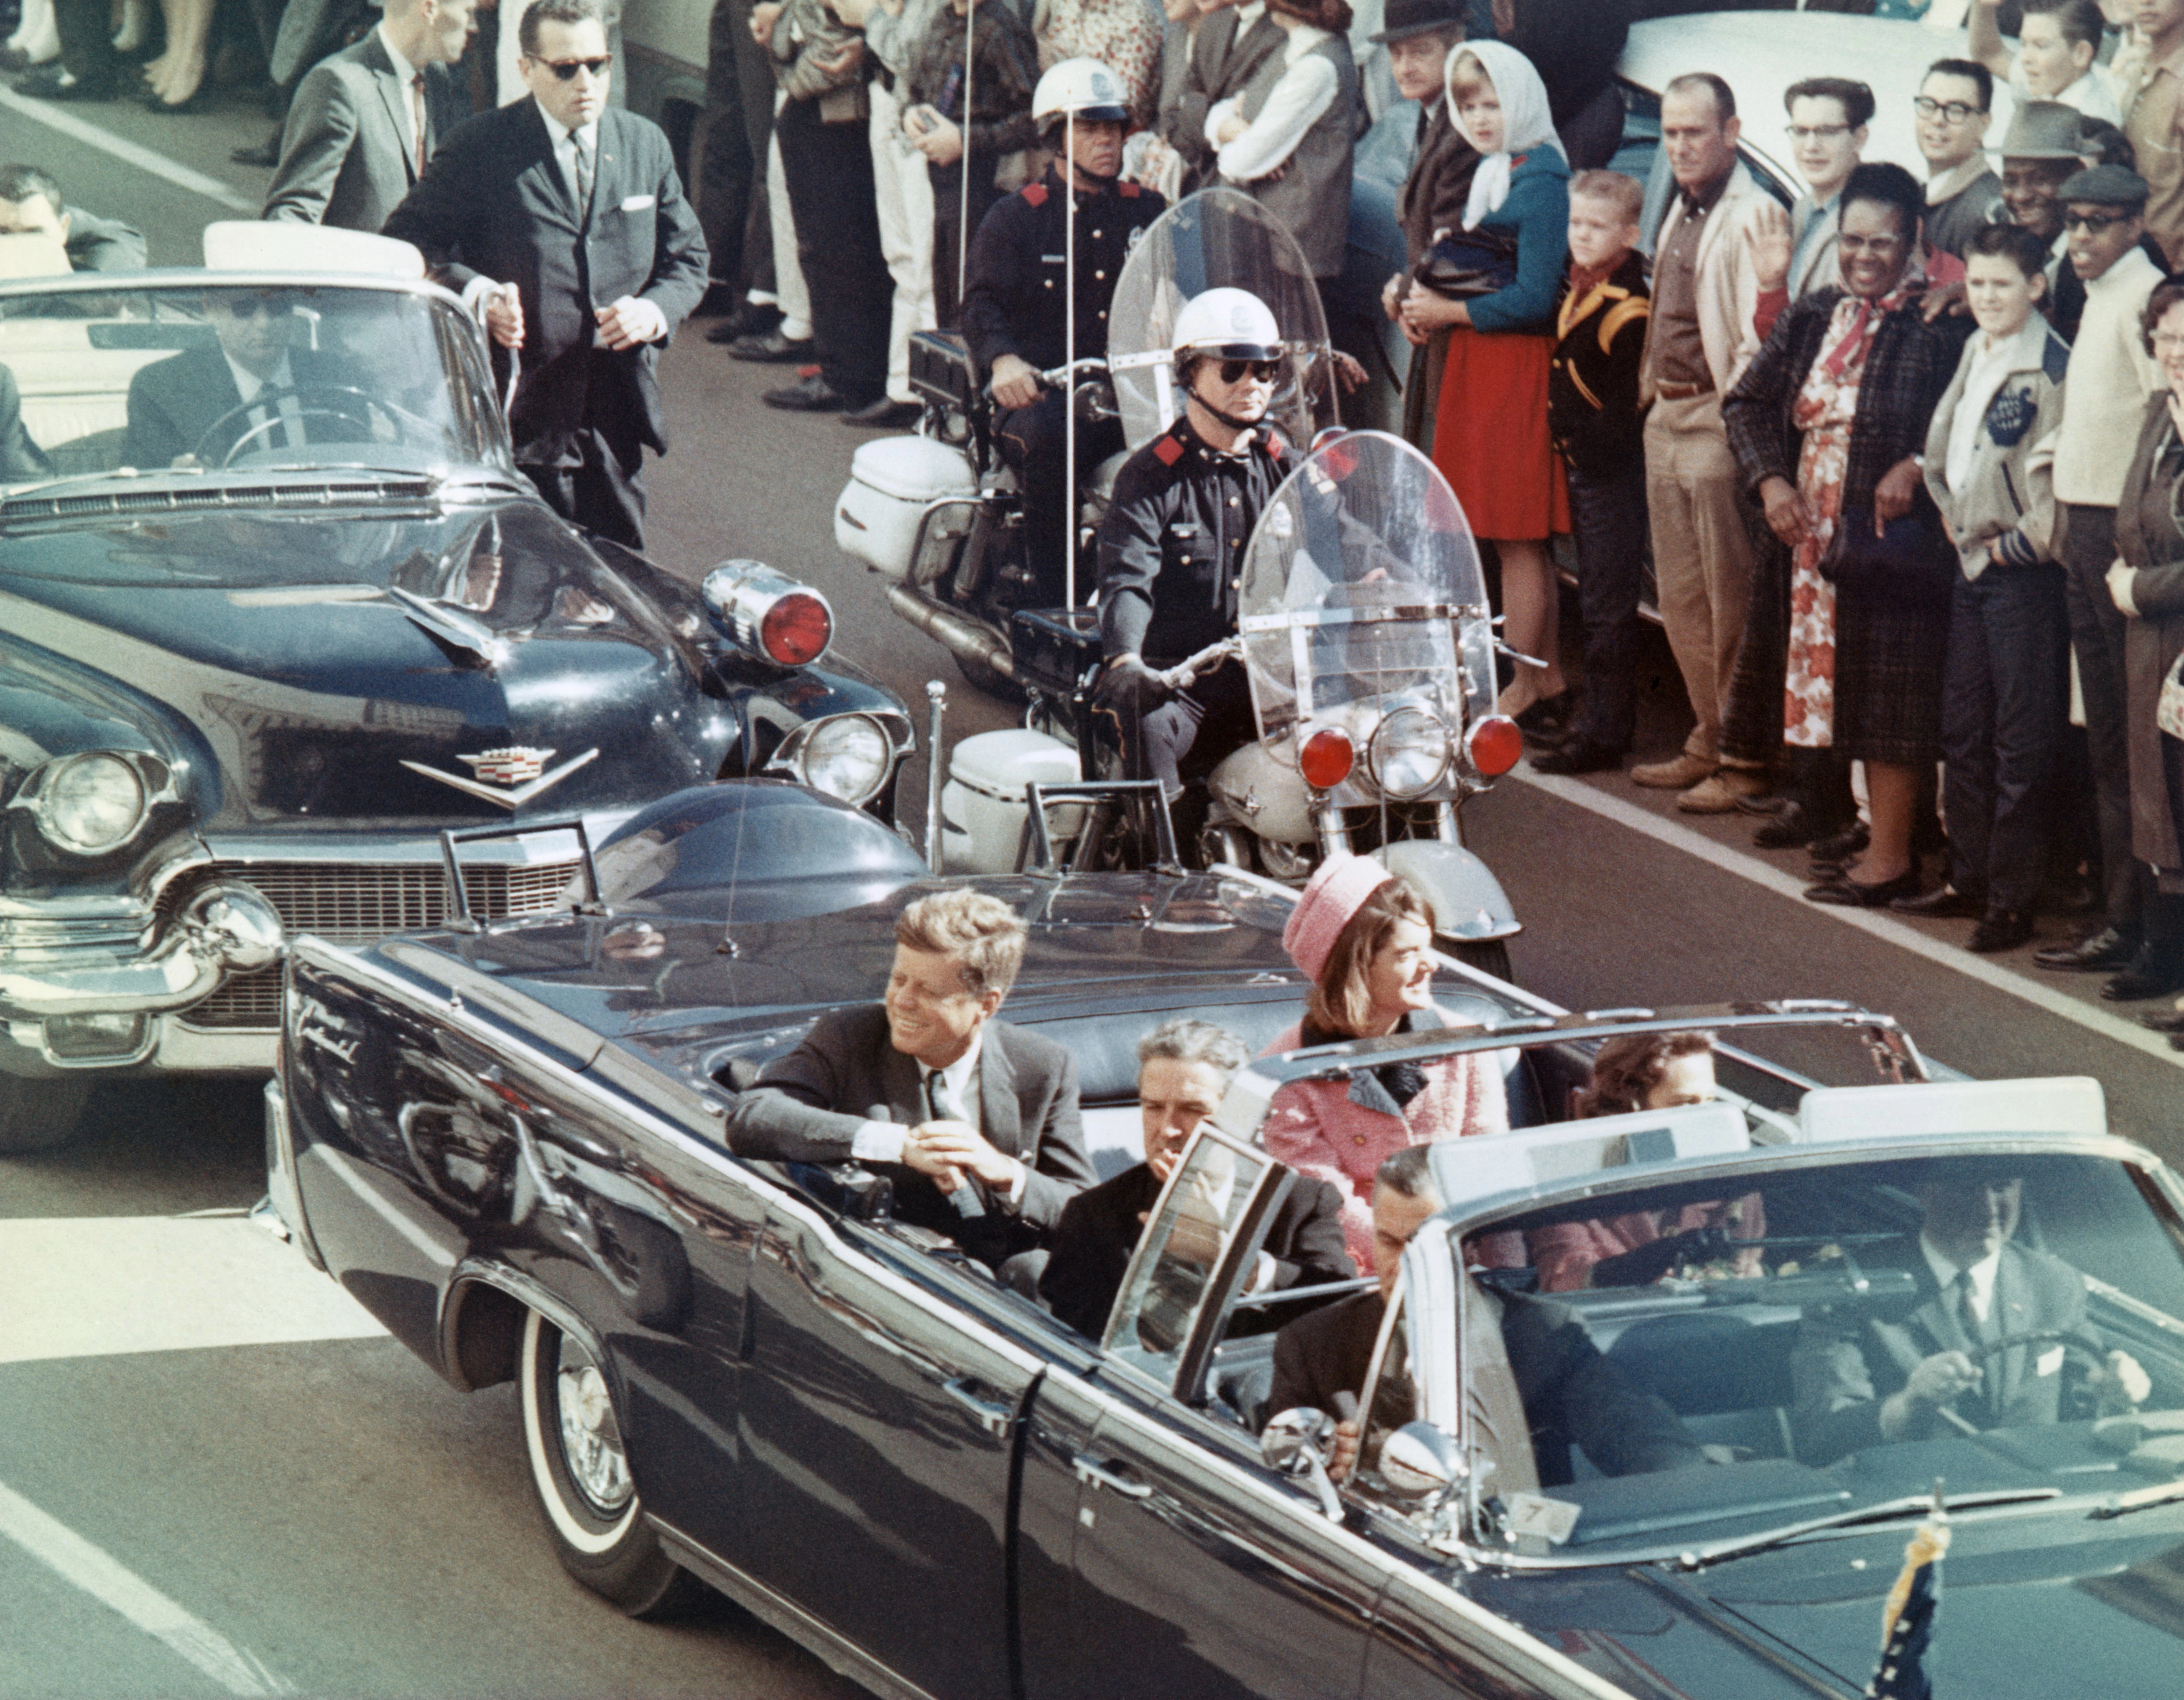 Джон та Жаклін Кеннеді у день трагедії, 22 листопада 1963